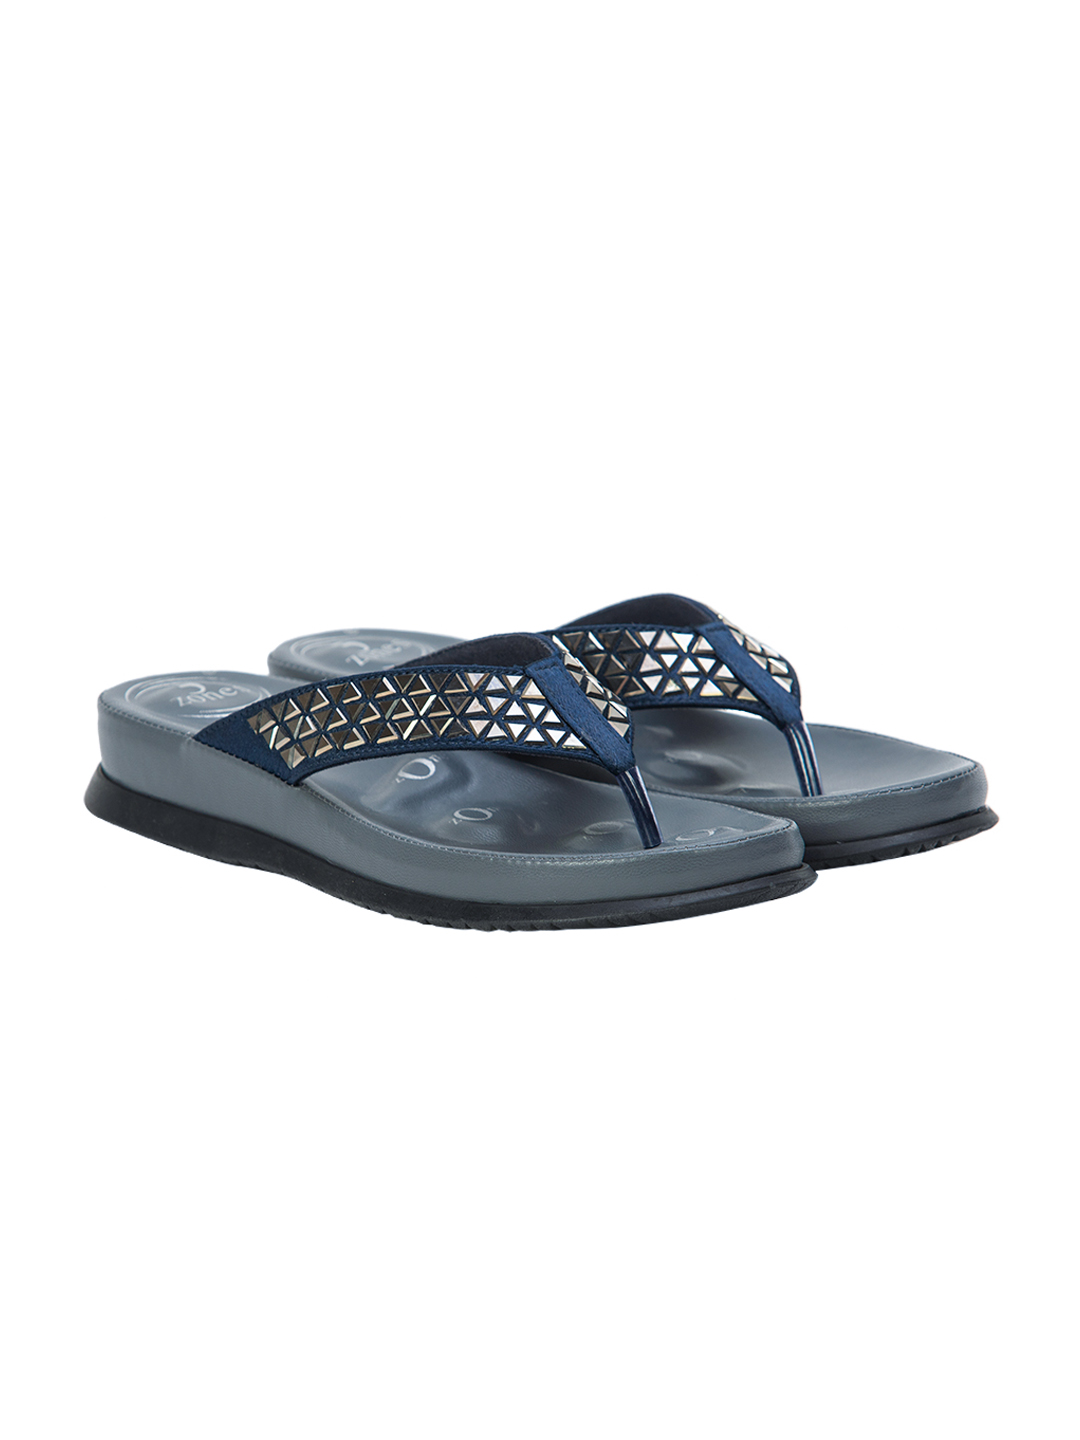 Buy Von Wellx Germany Comfort Beam Blue Slippers Online in Kozhikode